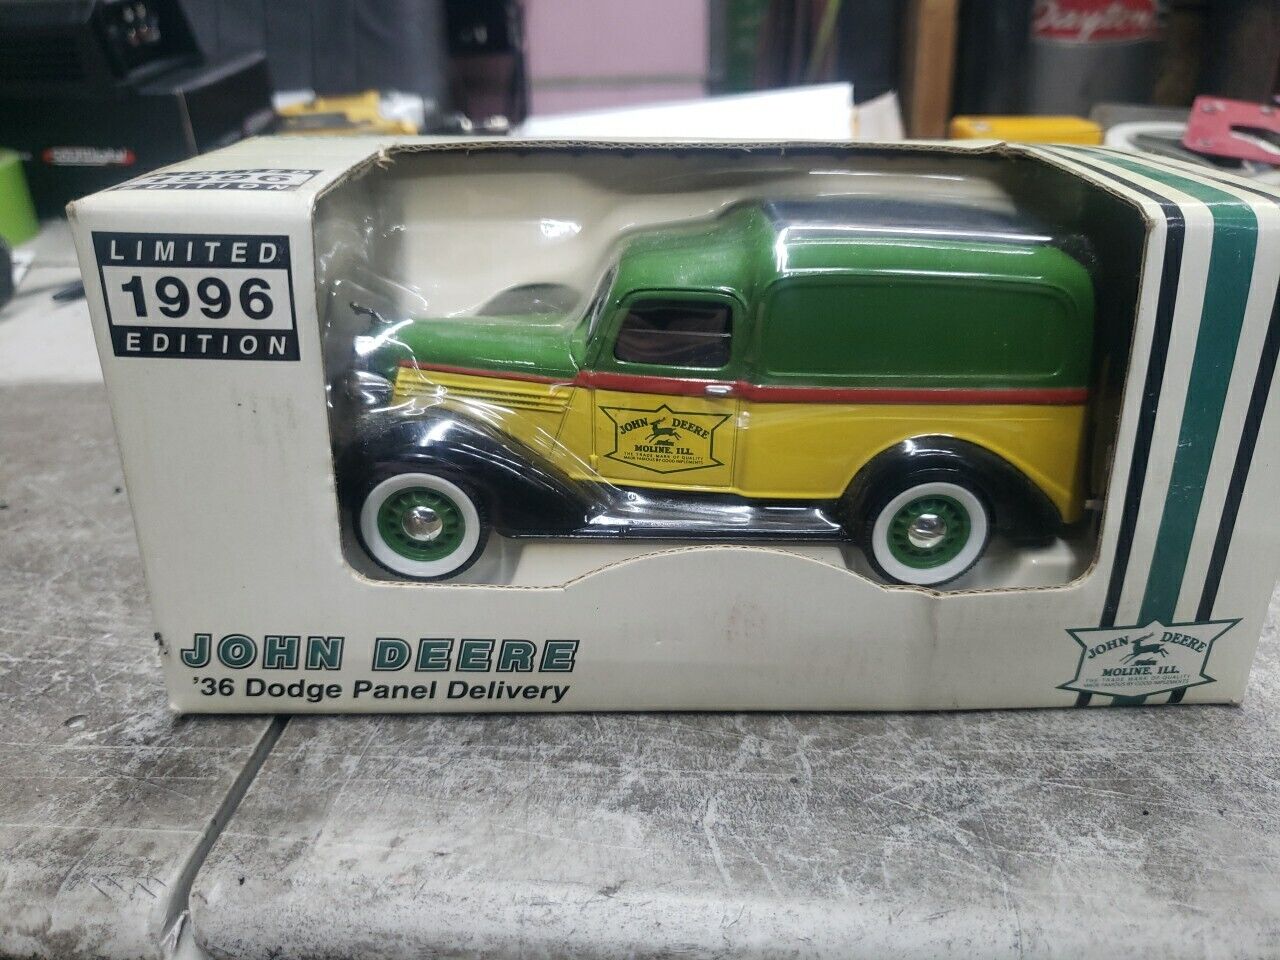 John Deere 1936 Dodge Panel Delivery Bank